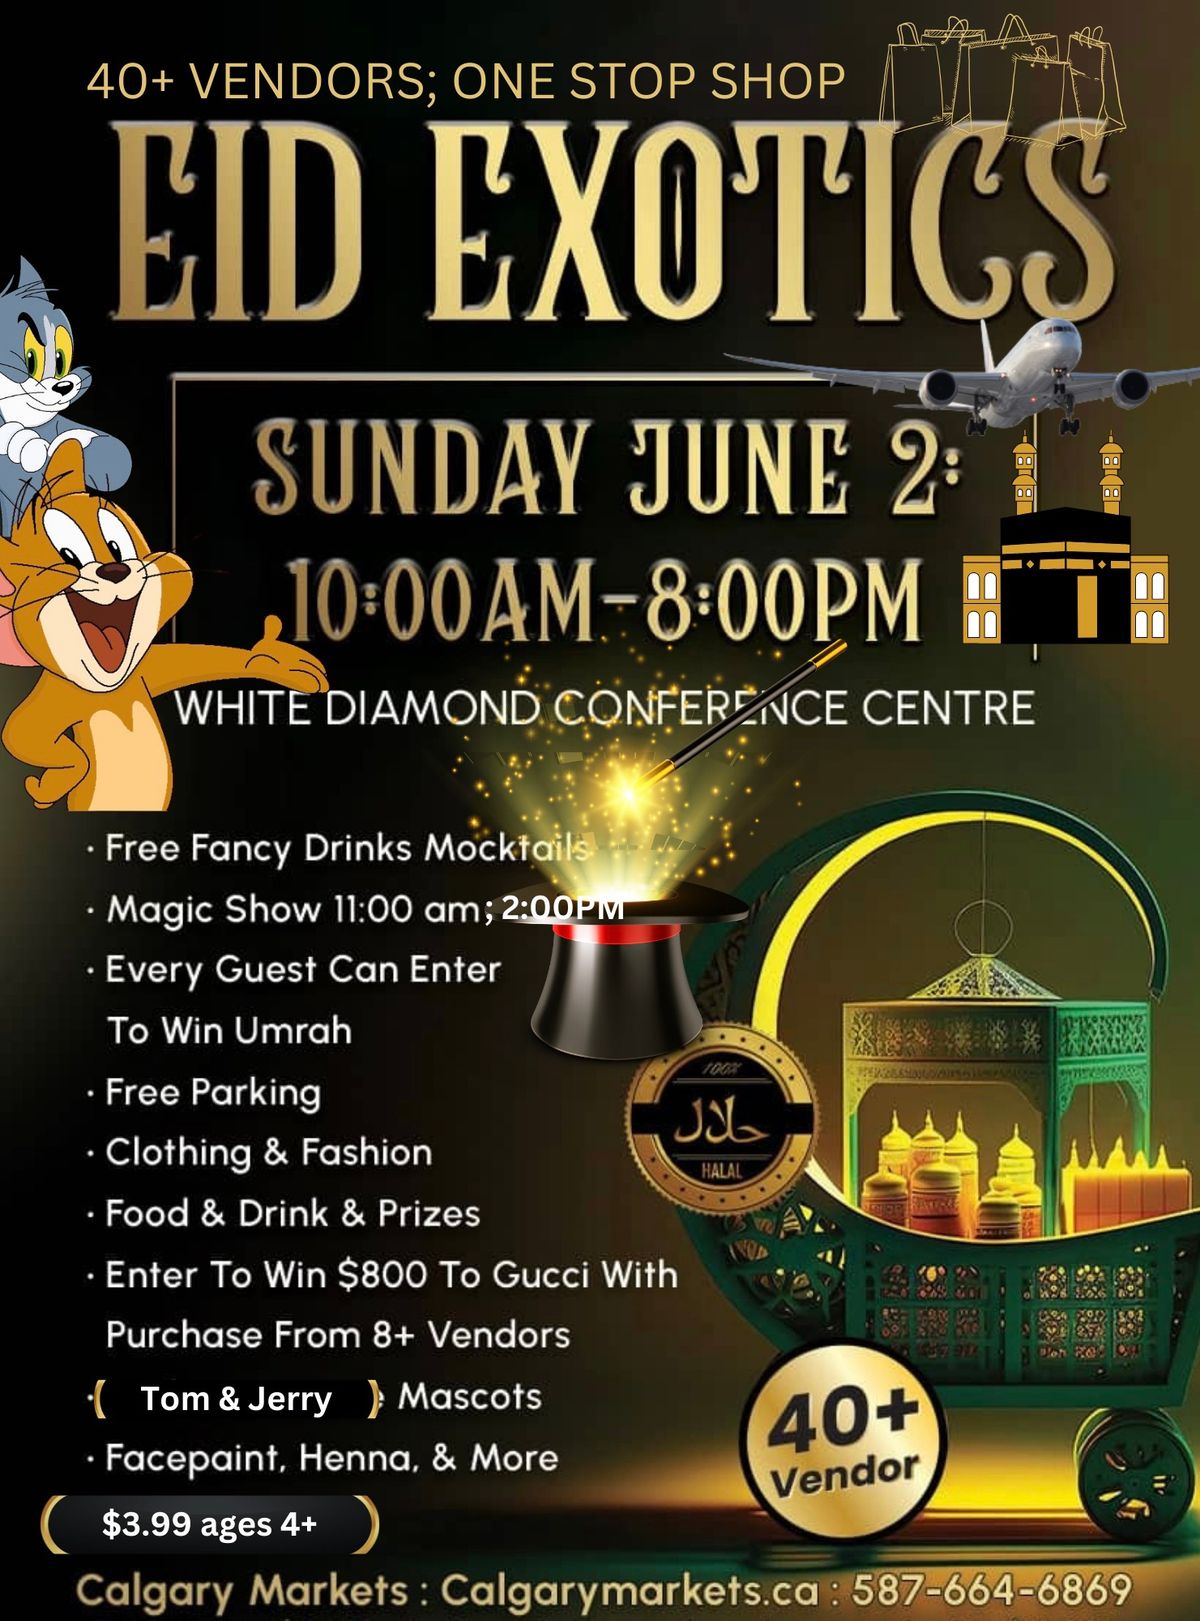 Eid Exotics Bazaar (Umrah trip giveaway)